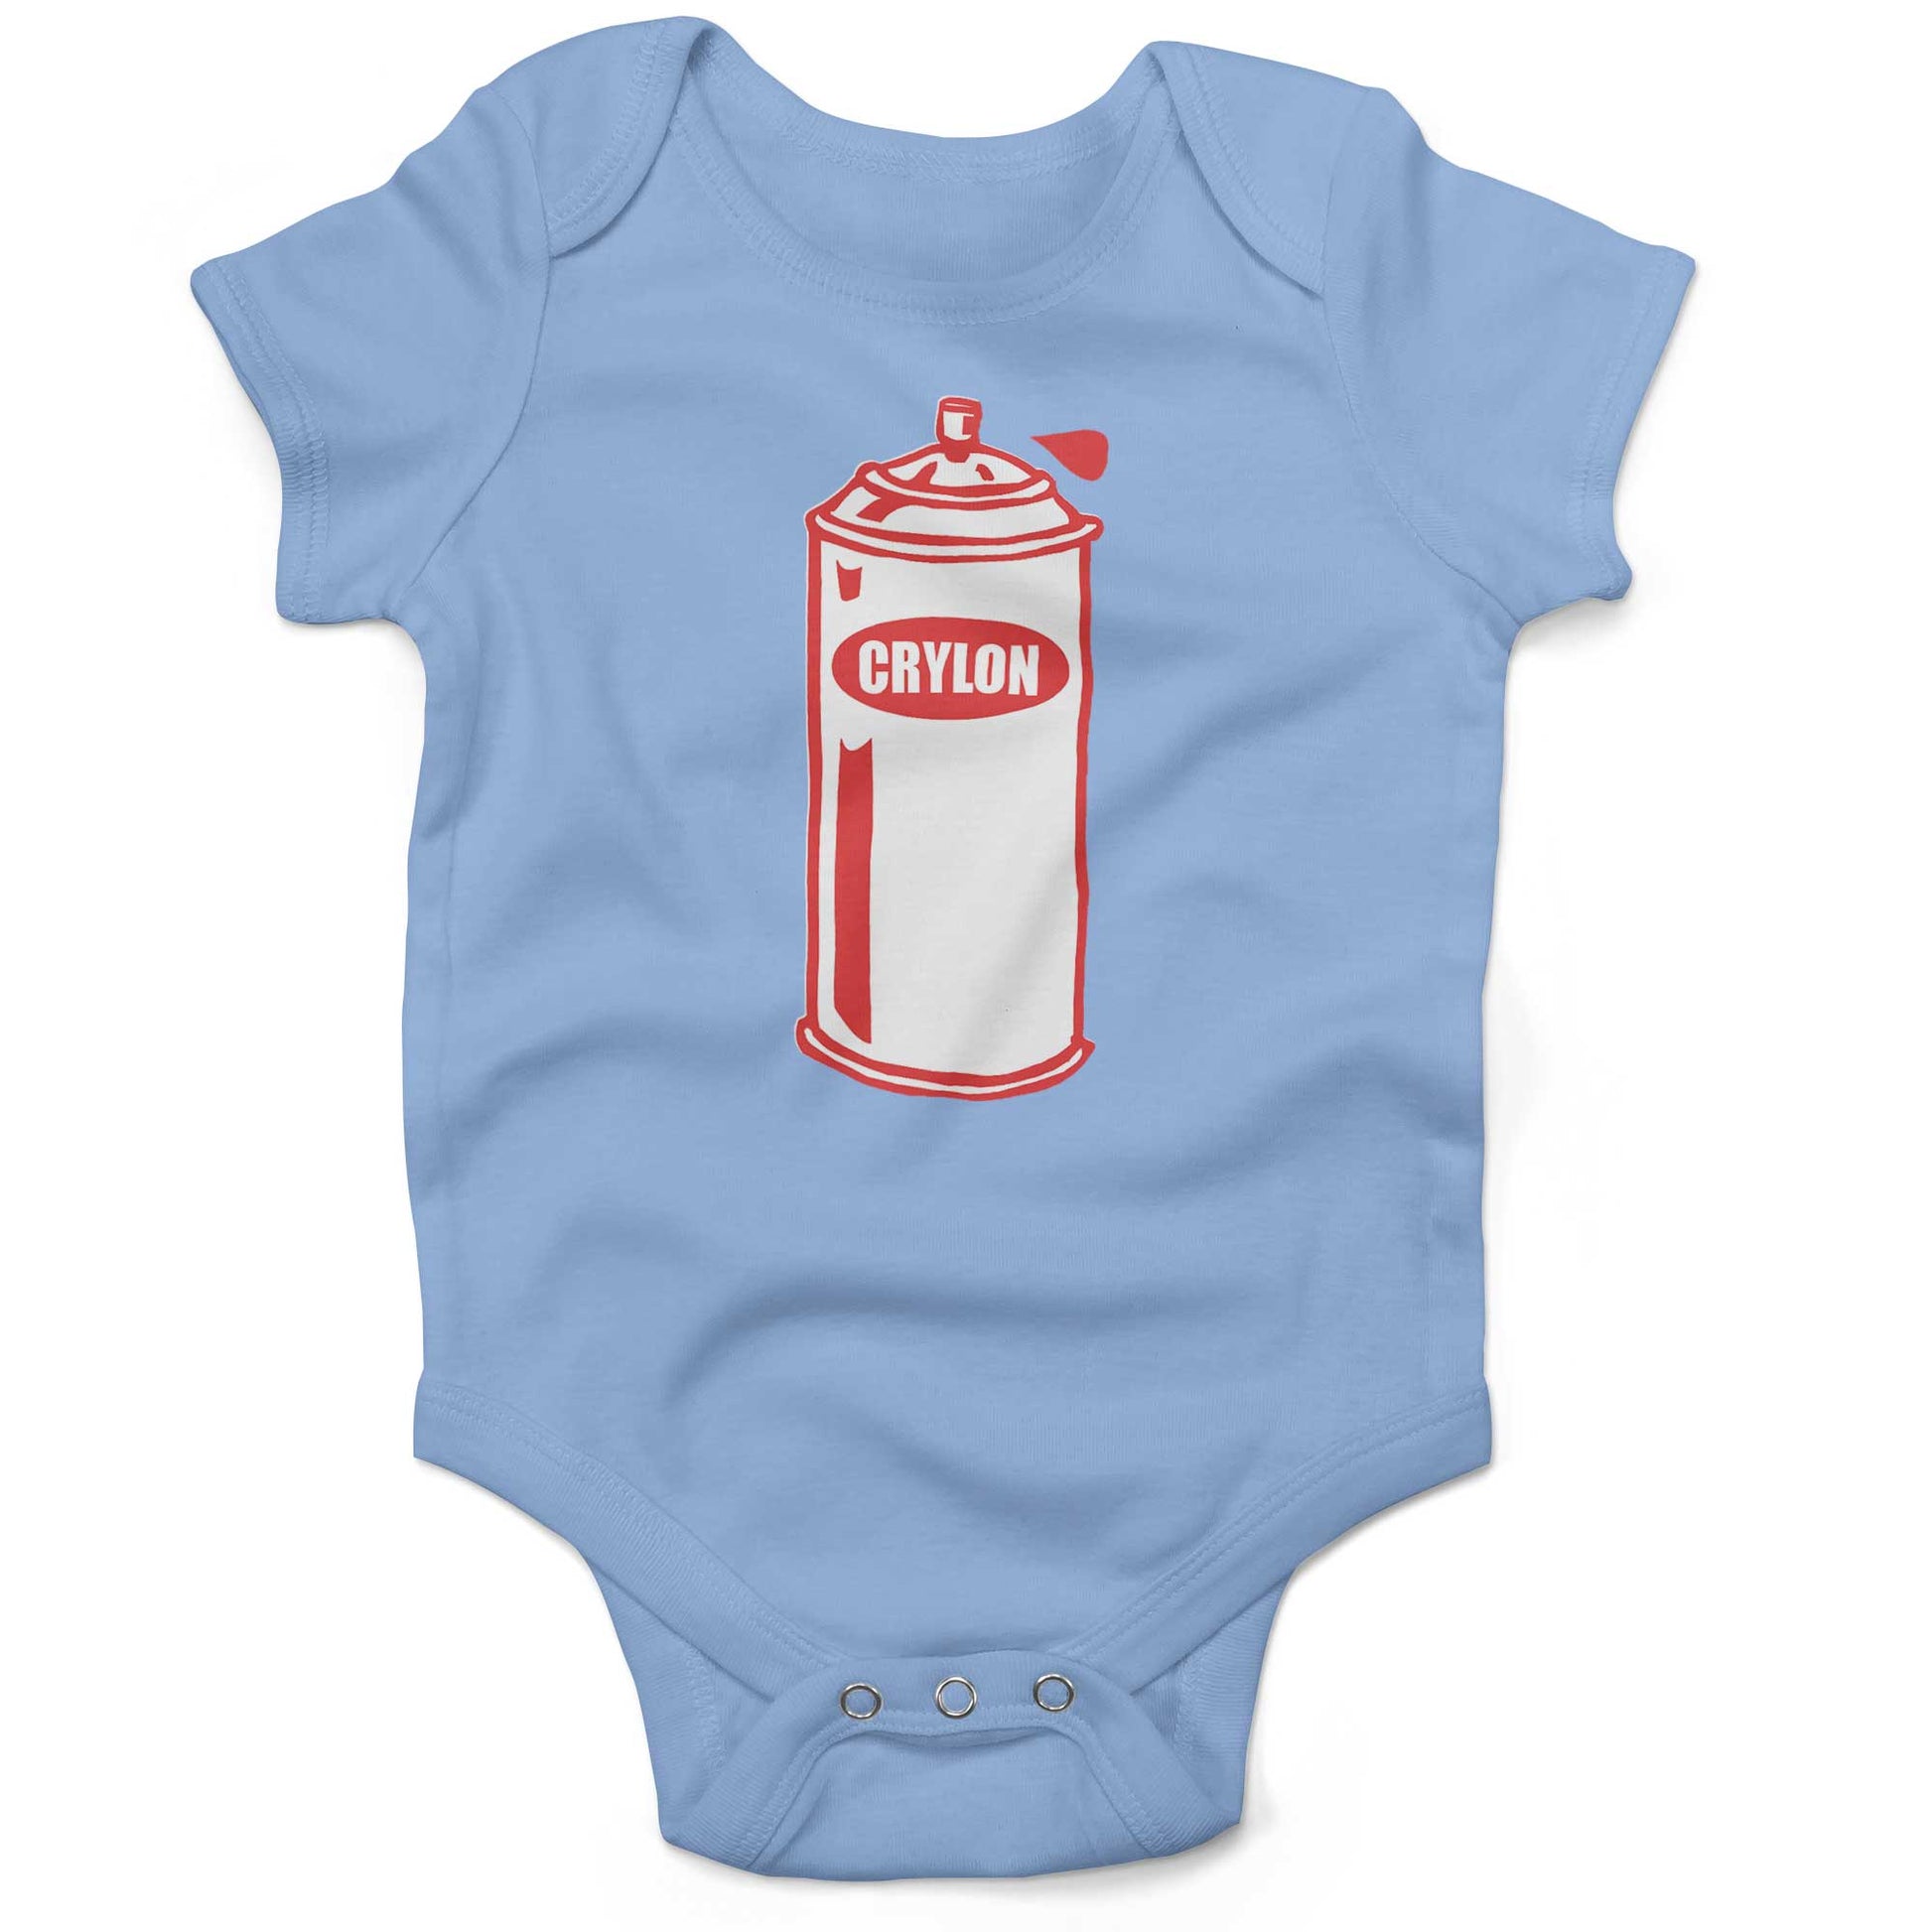 Crylon Cans Infant Bodysuit or Raglan Tee-Organic Baby Blue-3-6 months